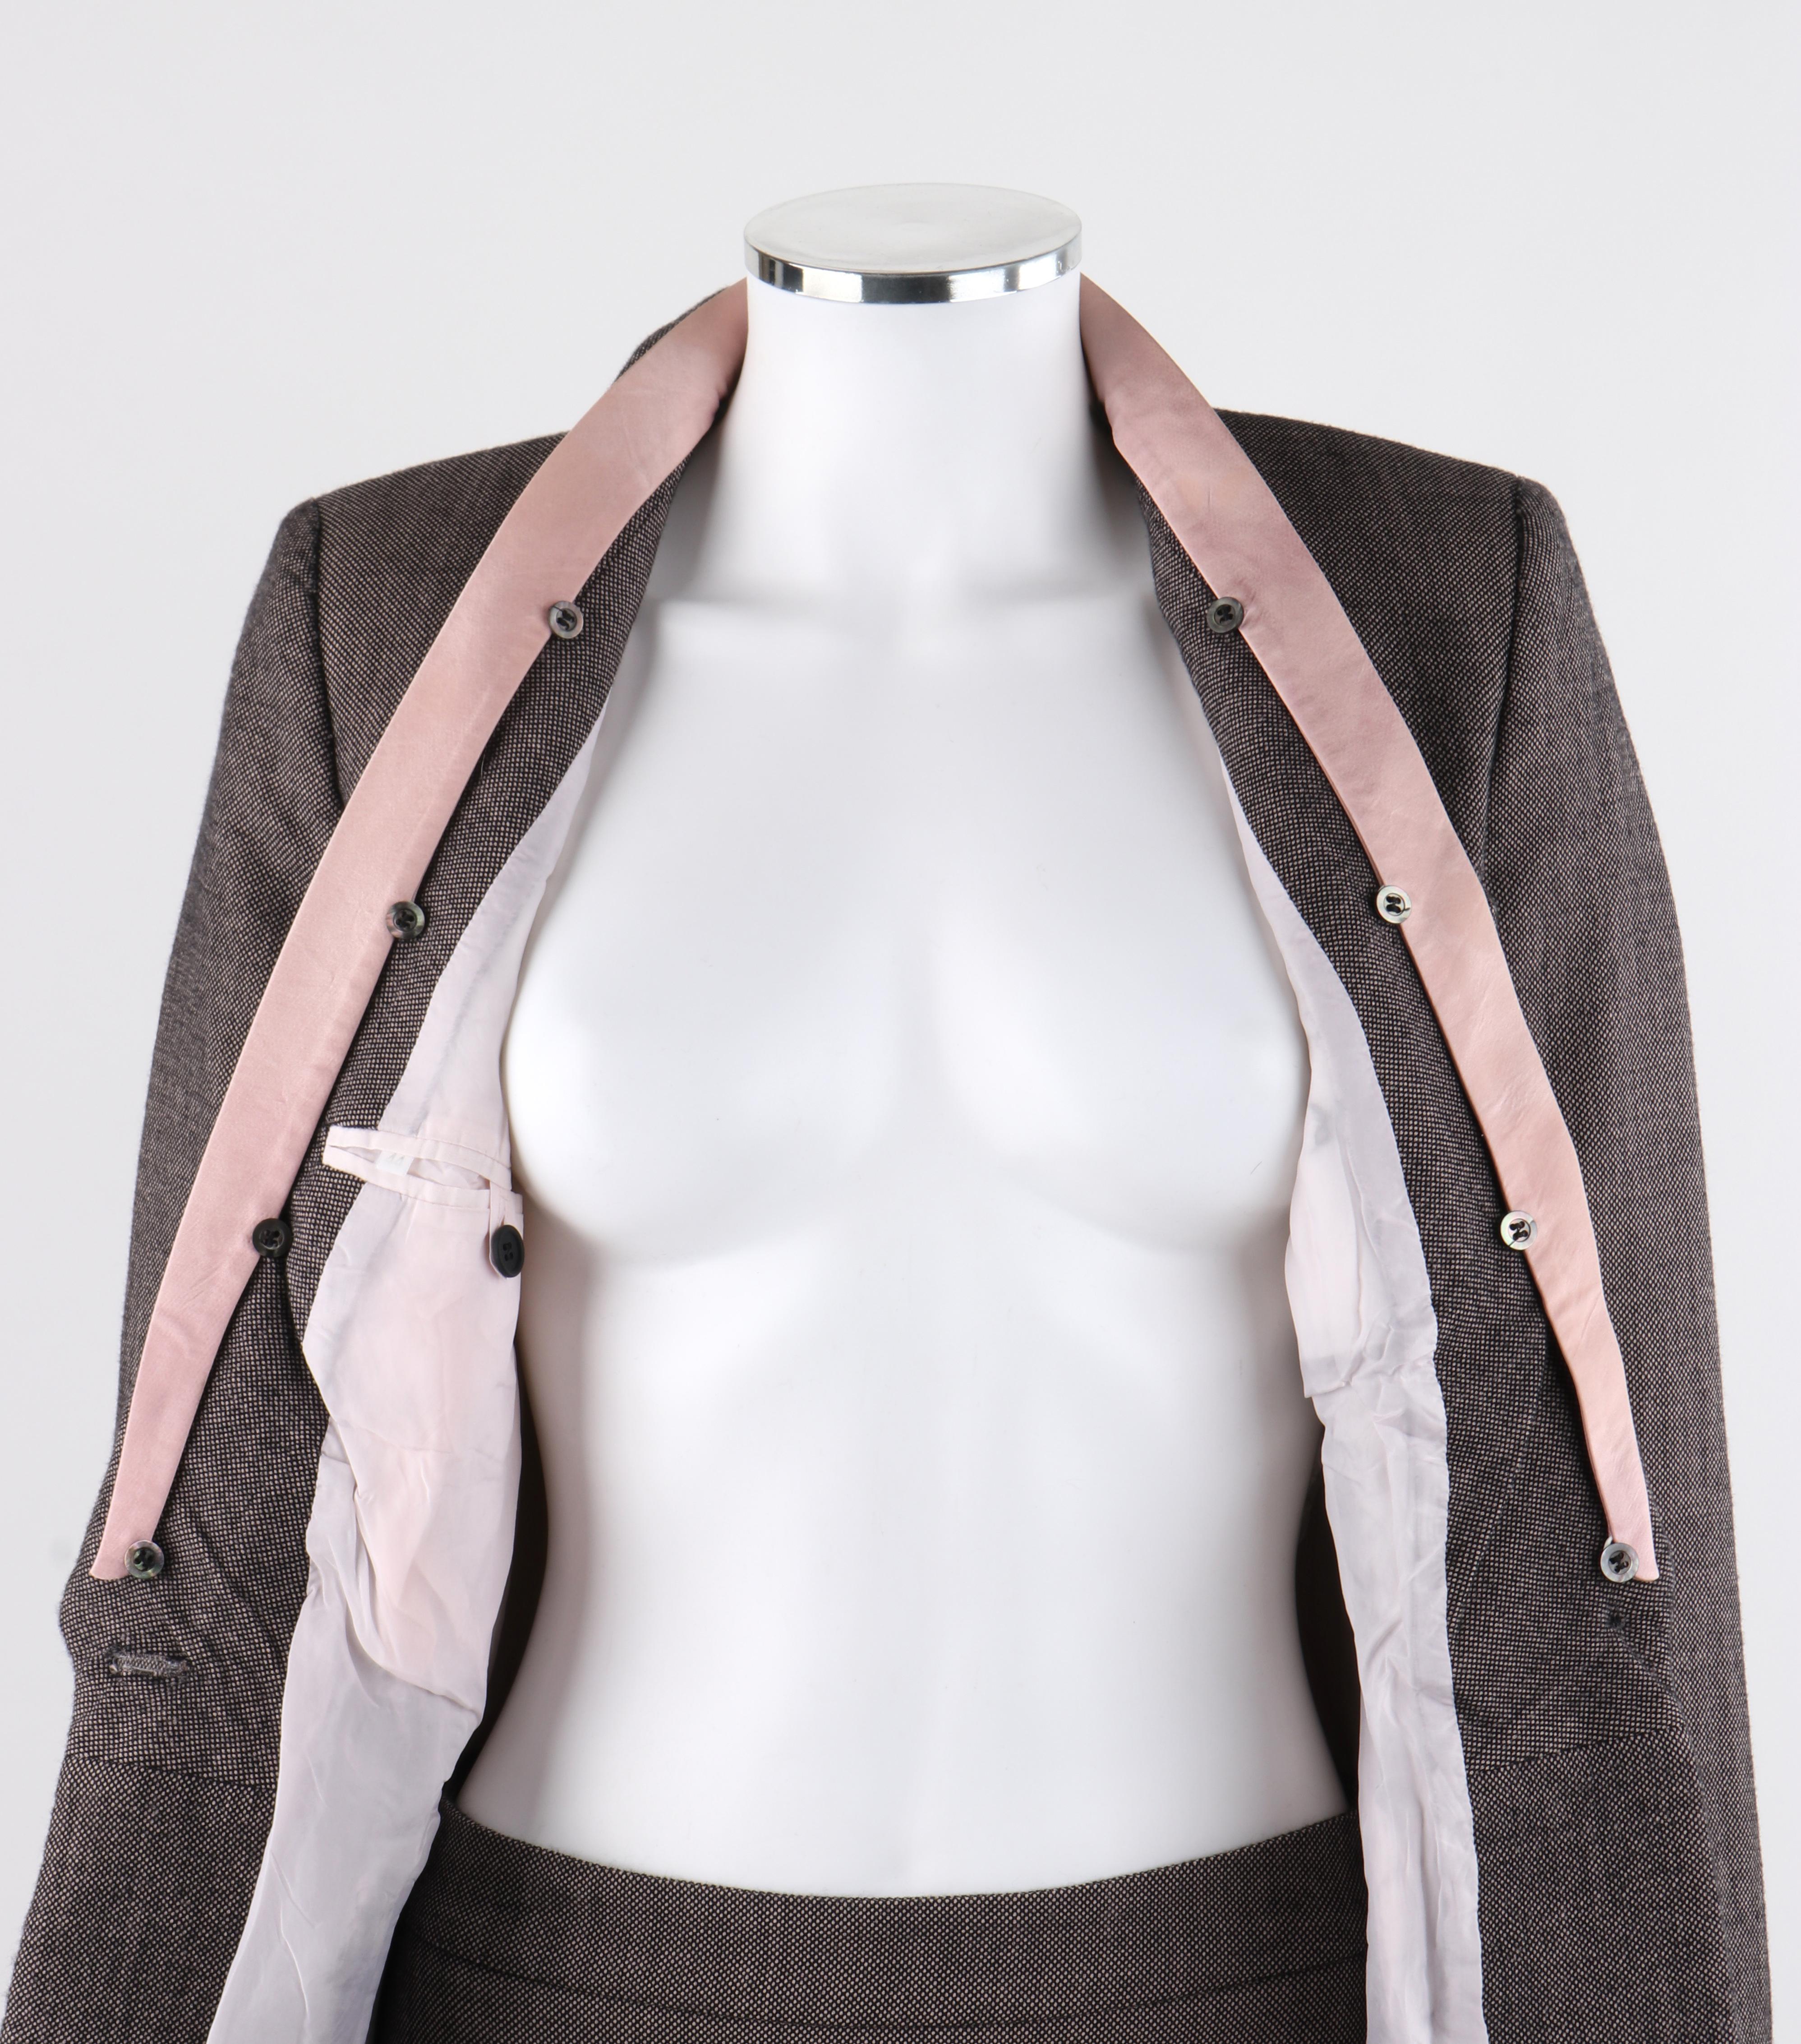  ALEXANDER McQUEEN A/W 1998 “Joan” 2 pc. Removable Collar Blazer Skirt Suit Set For Sale 5